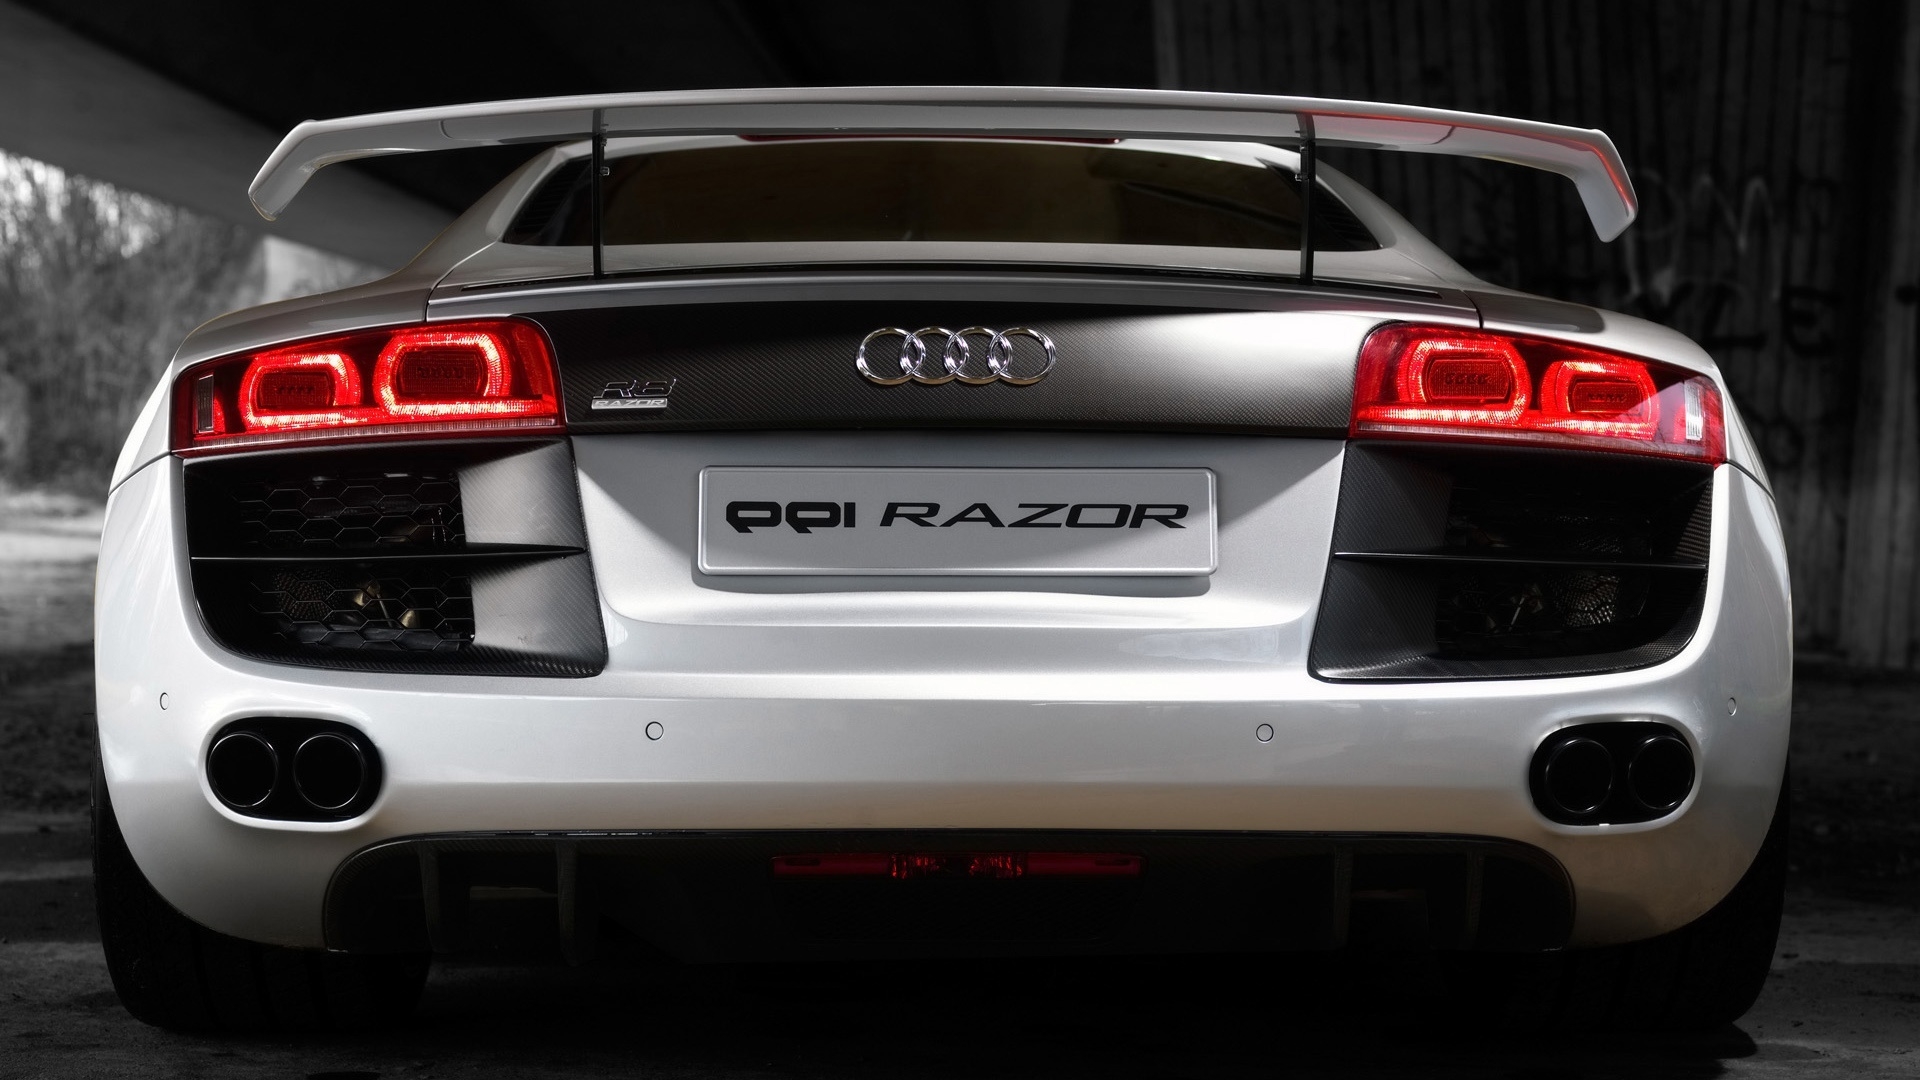 2008 PPI Audi R8 Razor Rear for 1920 x 1080 HDTV 1080p resolution